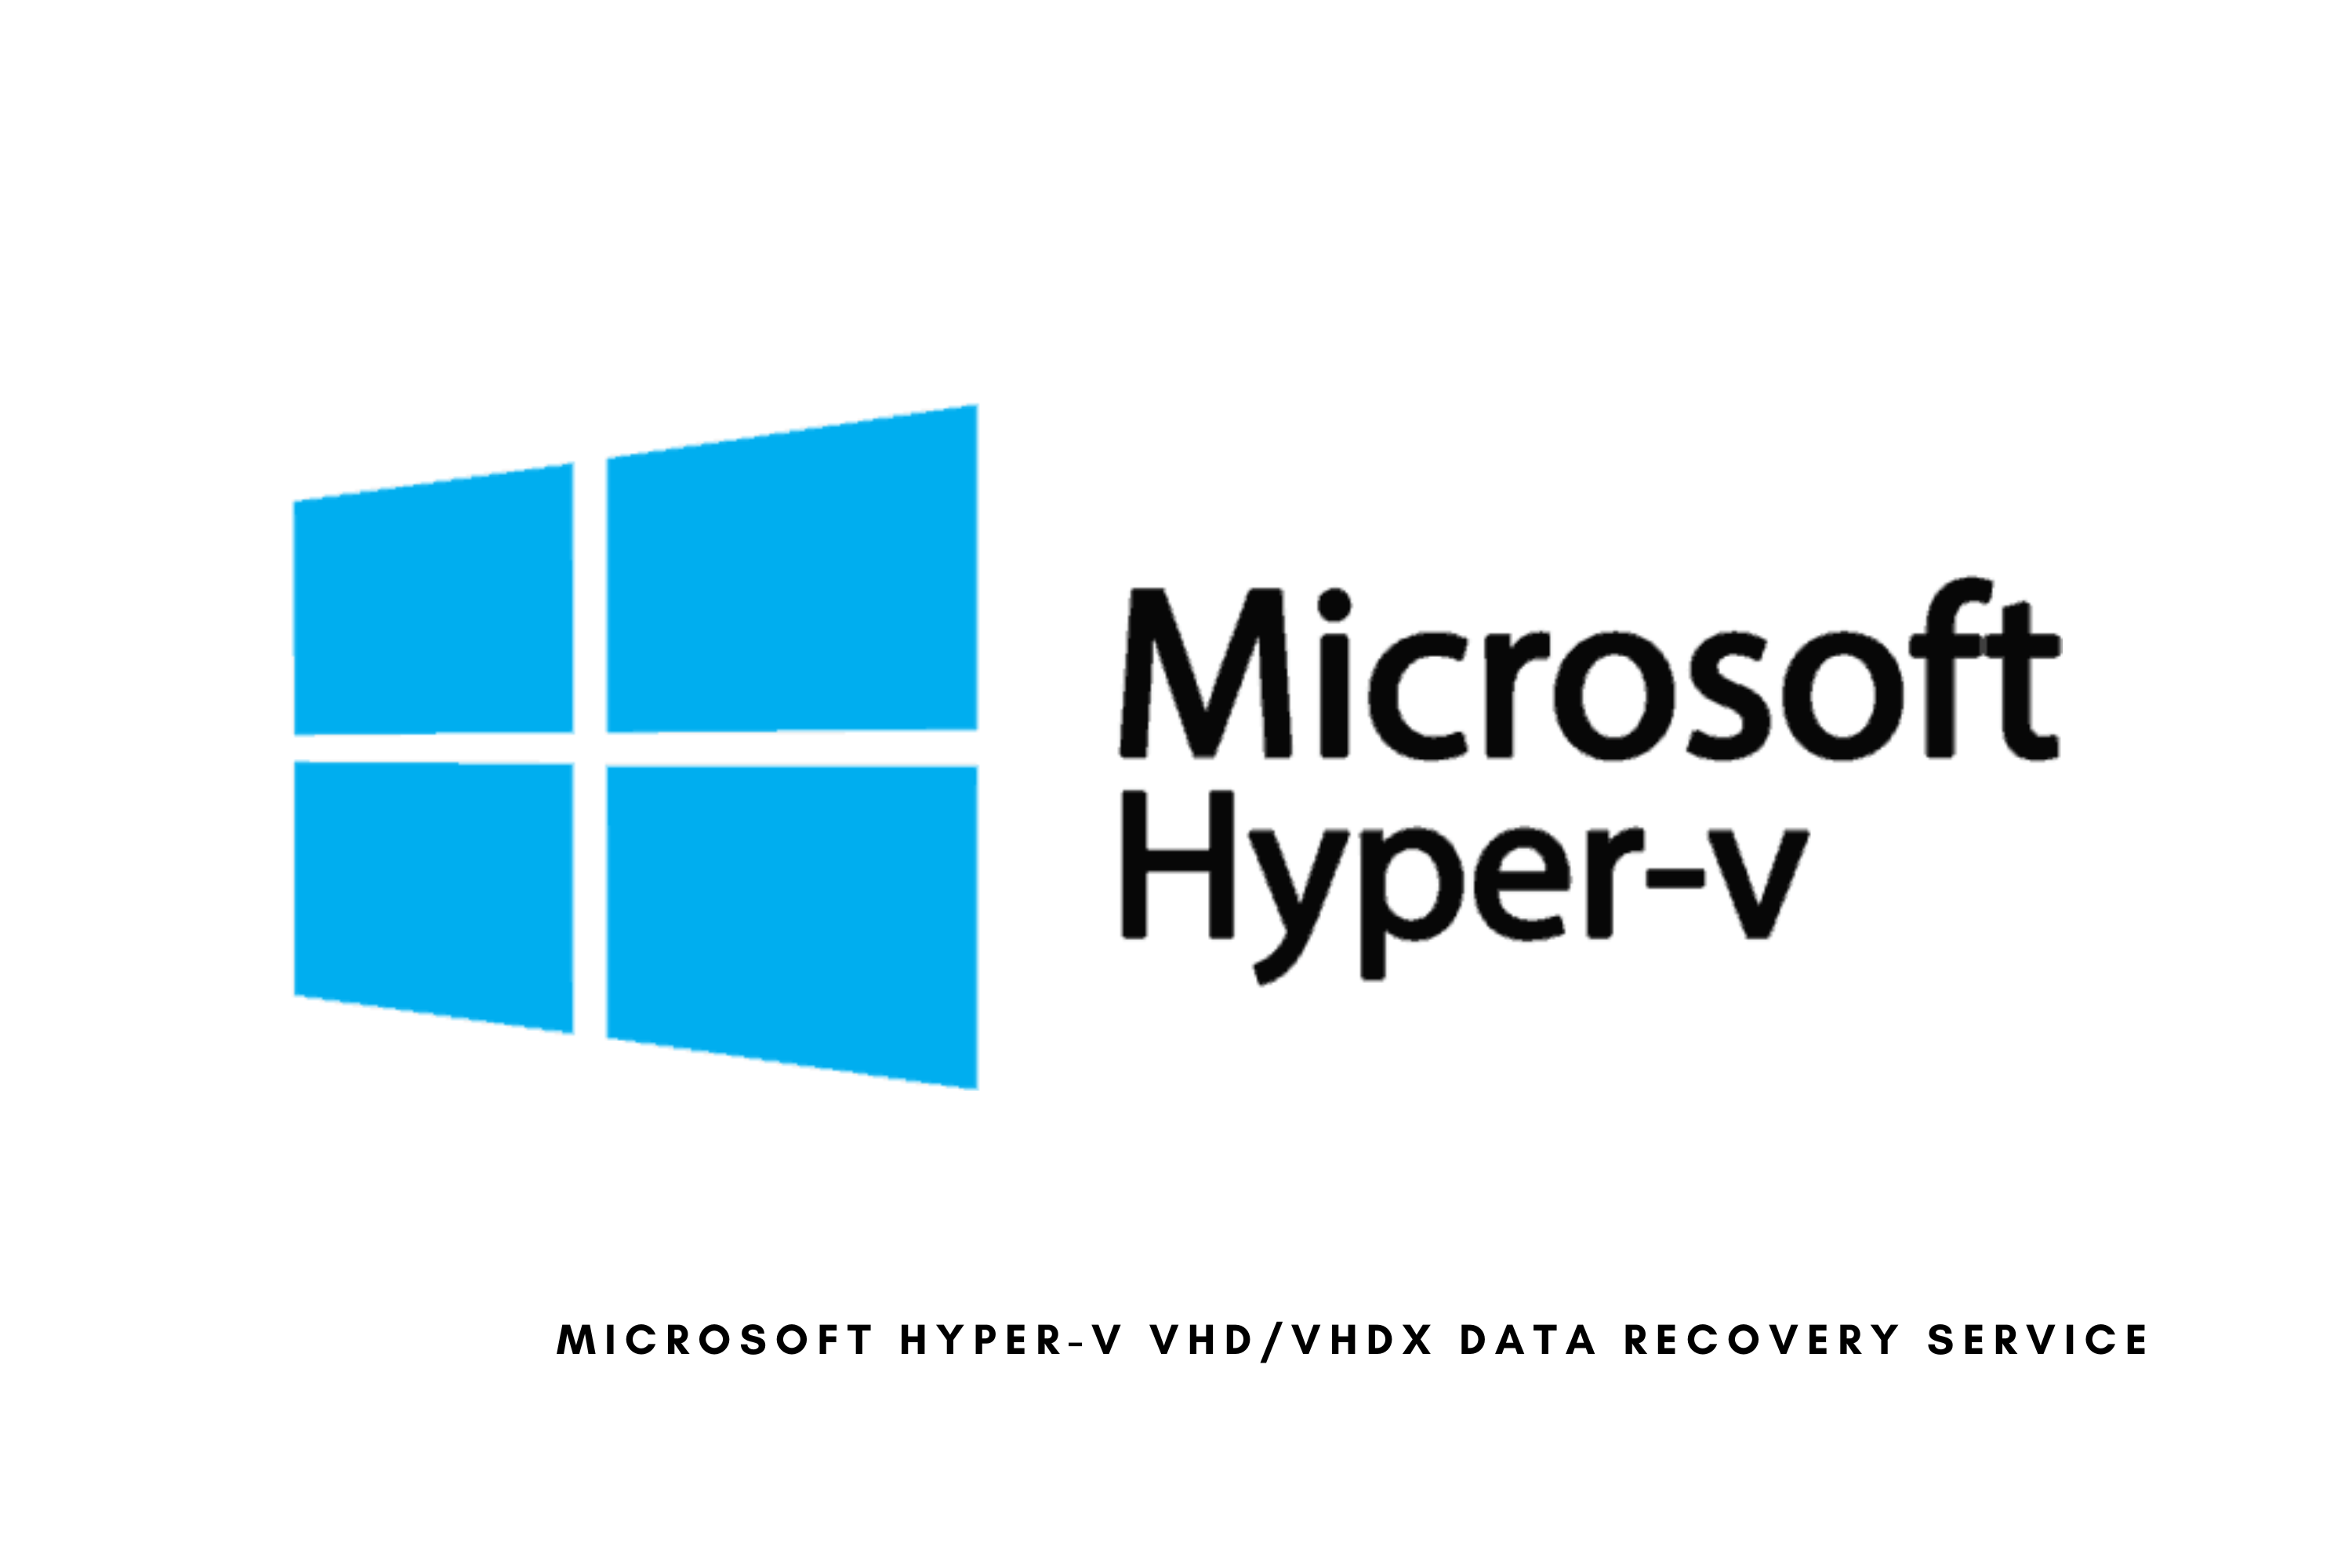 Microsoft Hyper-V VHD / VHDX Data Recovery